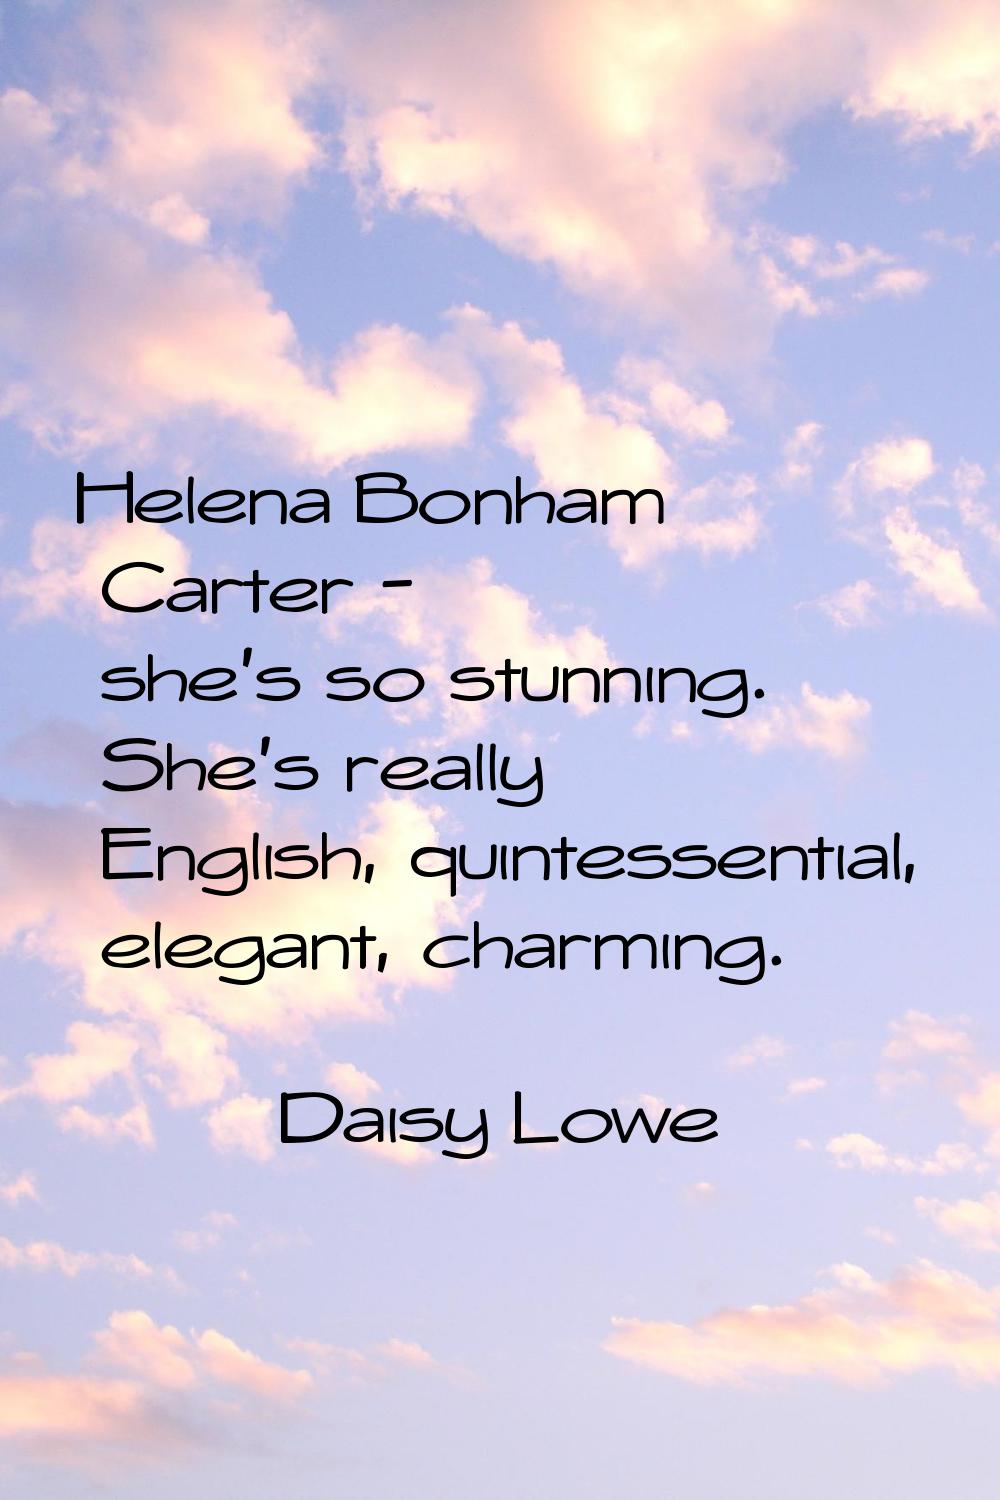 Helena Bonham Carter - she's so stunning. She's really English, quintessential, elegant, charming.